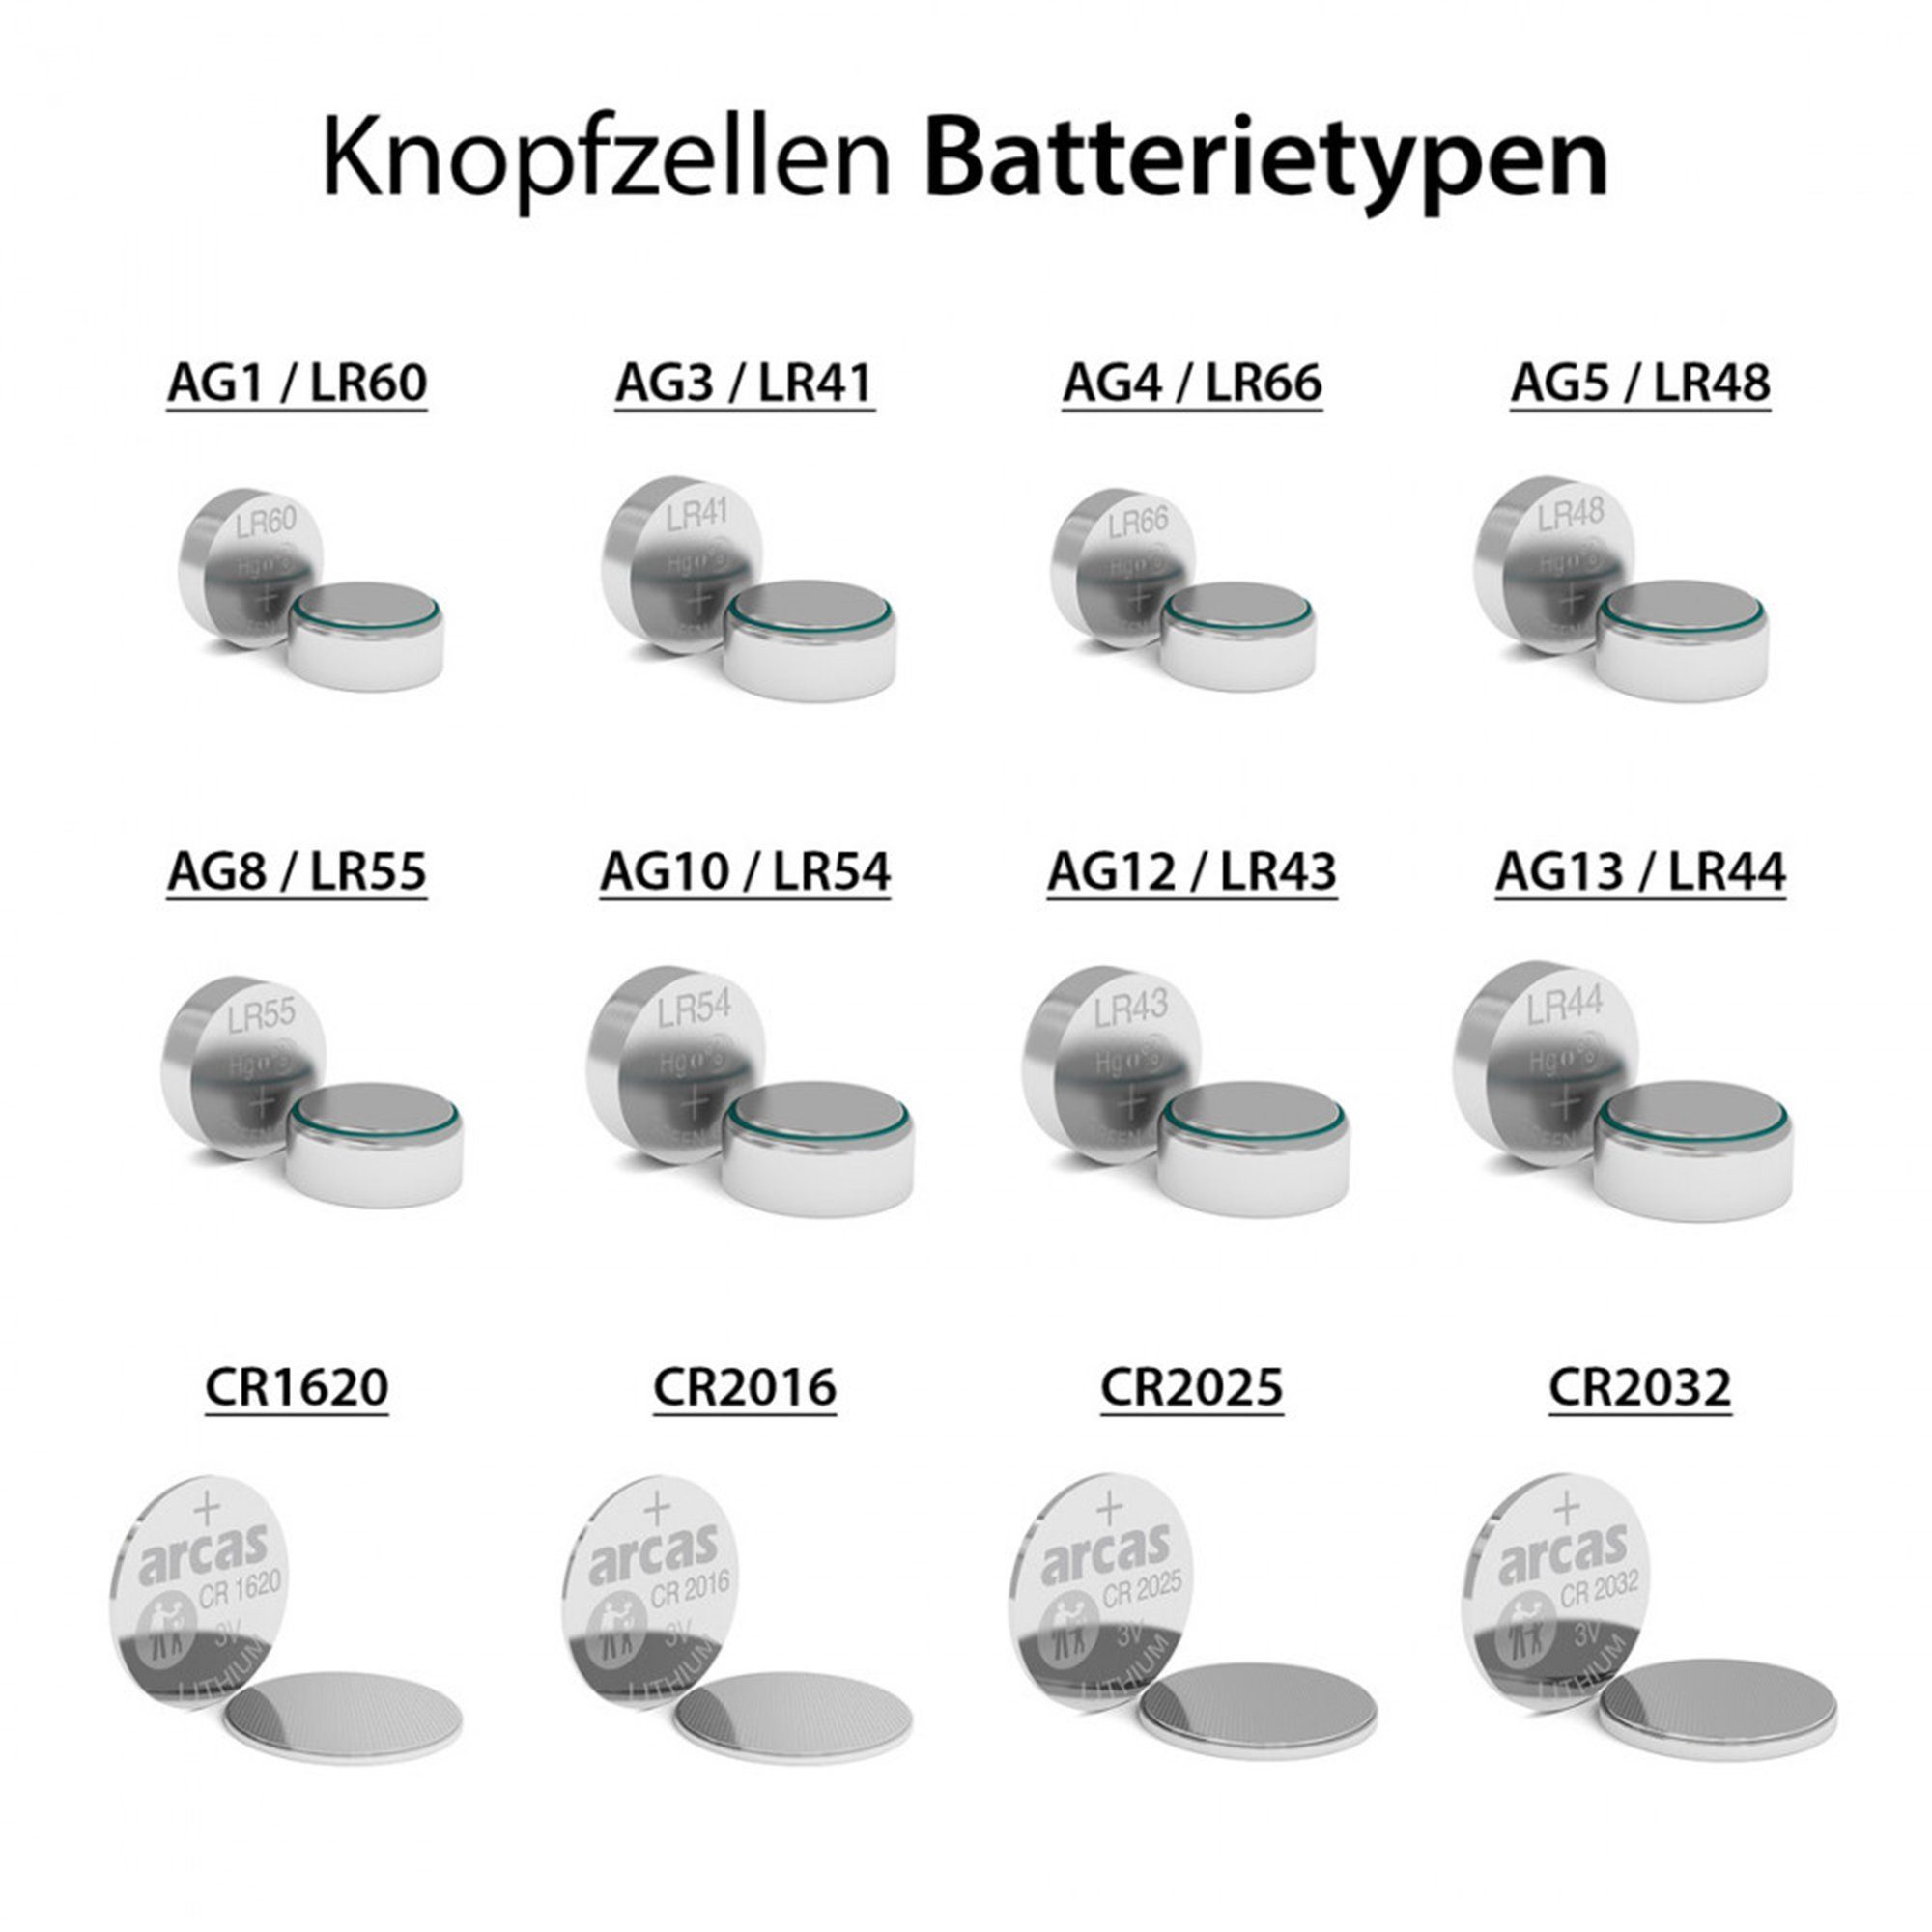 SLABO CR2016 Knopfzellen Batterien Lithium - 3.0V - 20er-Pack – Li-Ion  Knopfzellen für Armbanduhr, CR-2016 Batterie